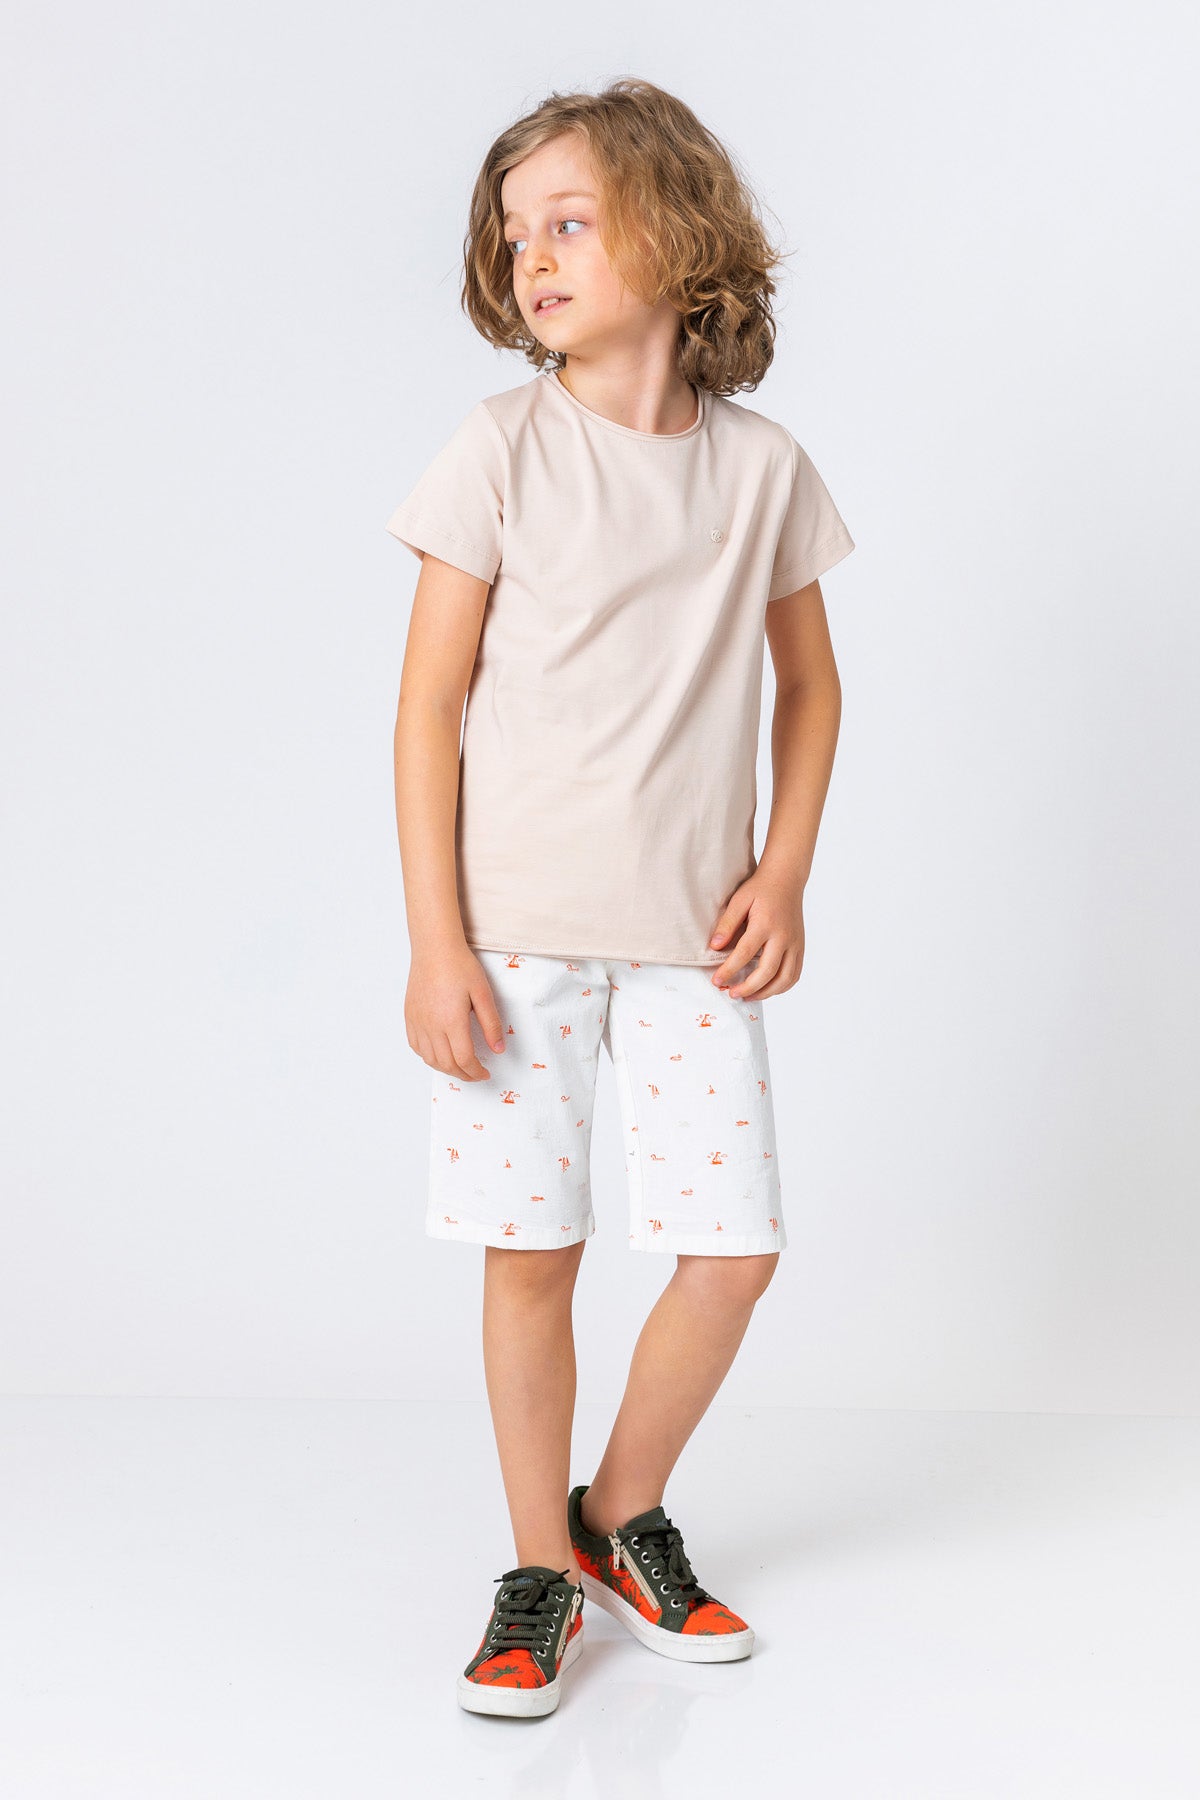 Neck Plain Solid Sleeve Short Kids Basic Round T-Shirt InCity Boys